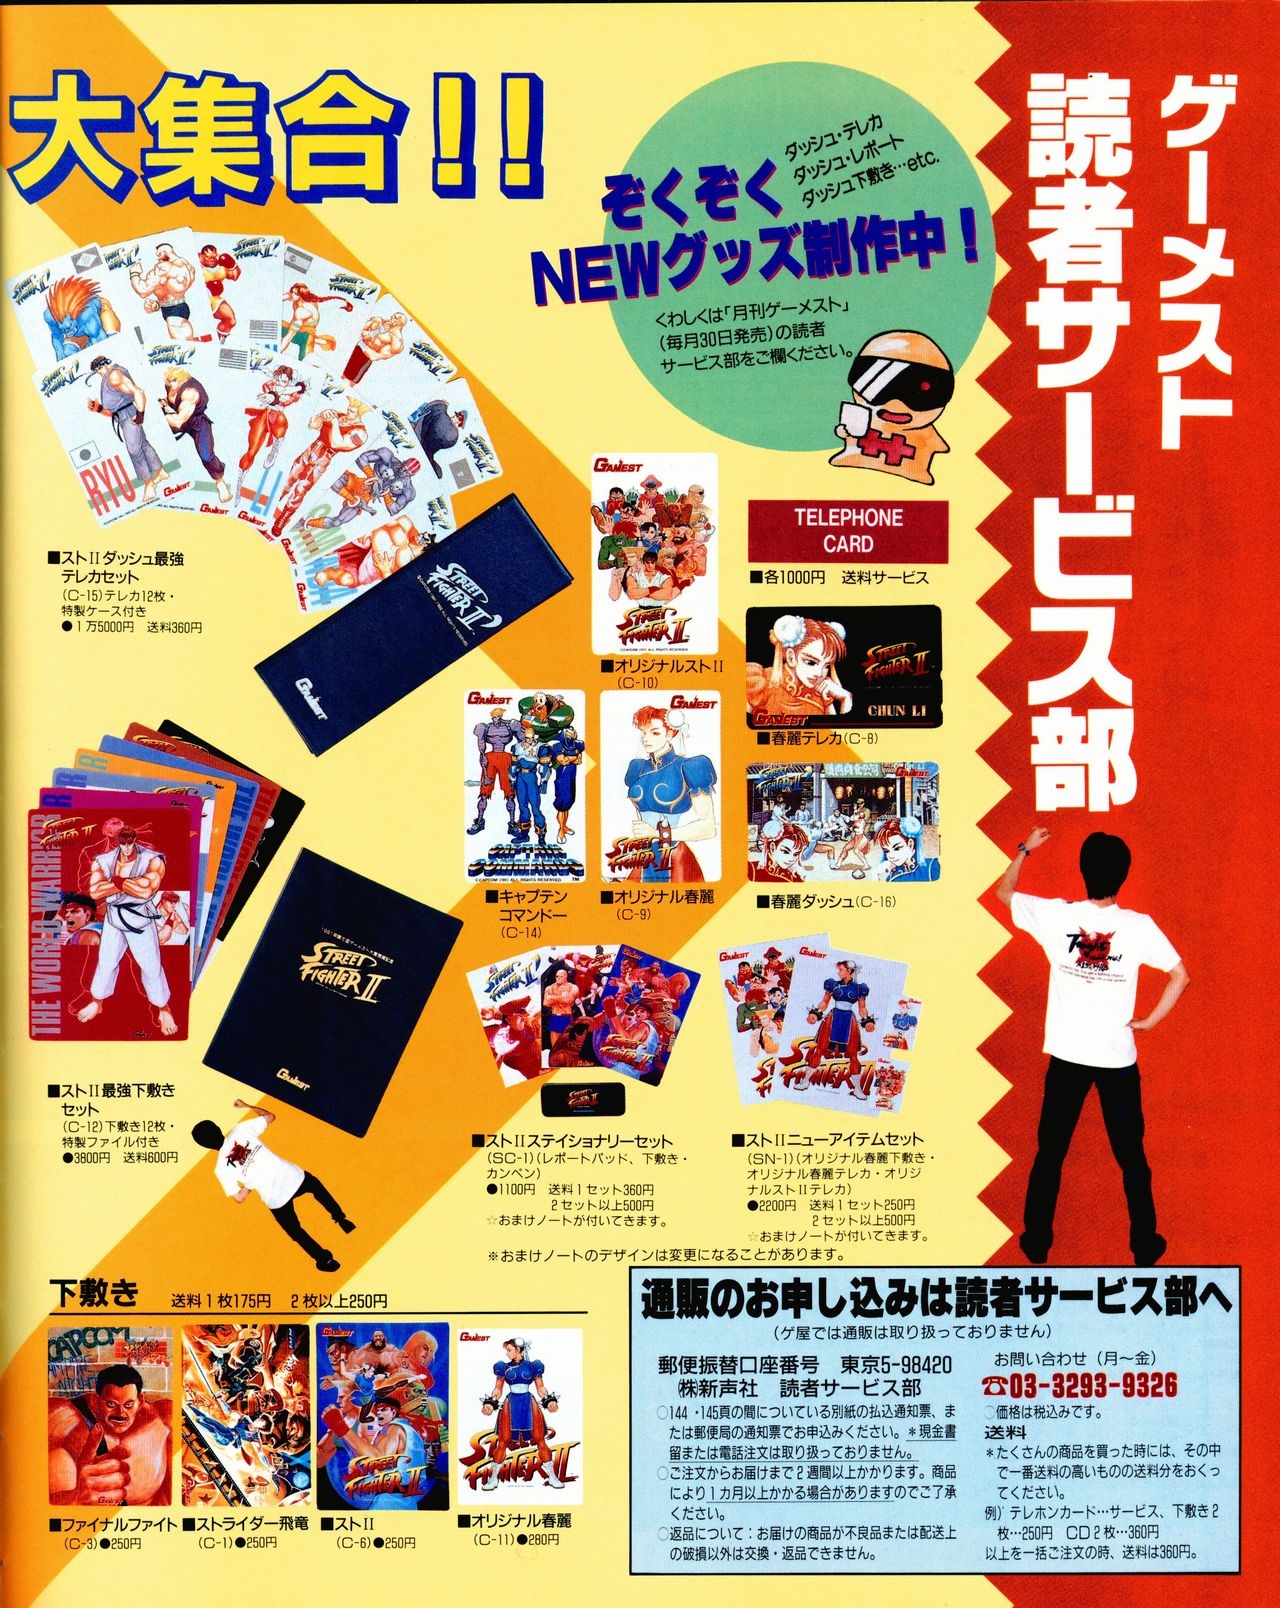 Street Fighter II Dash - Gamest special issue 77 151